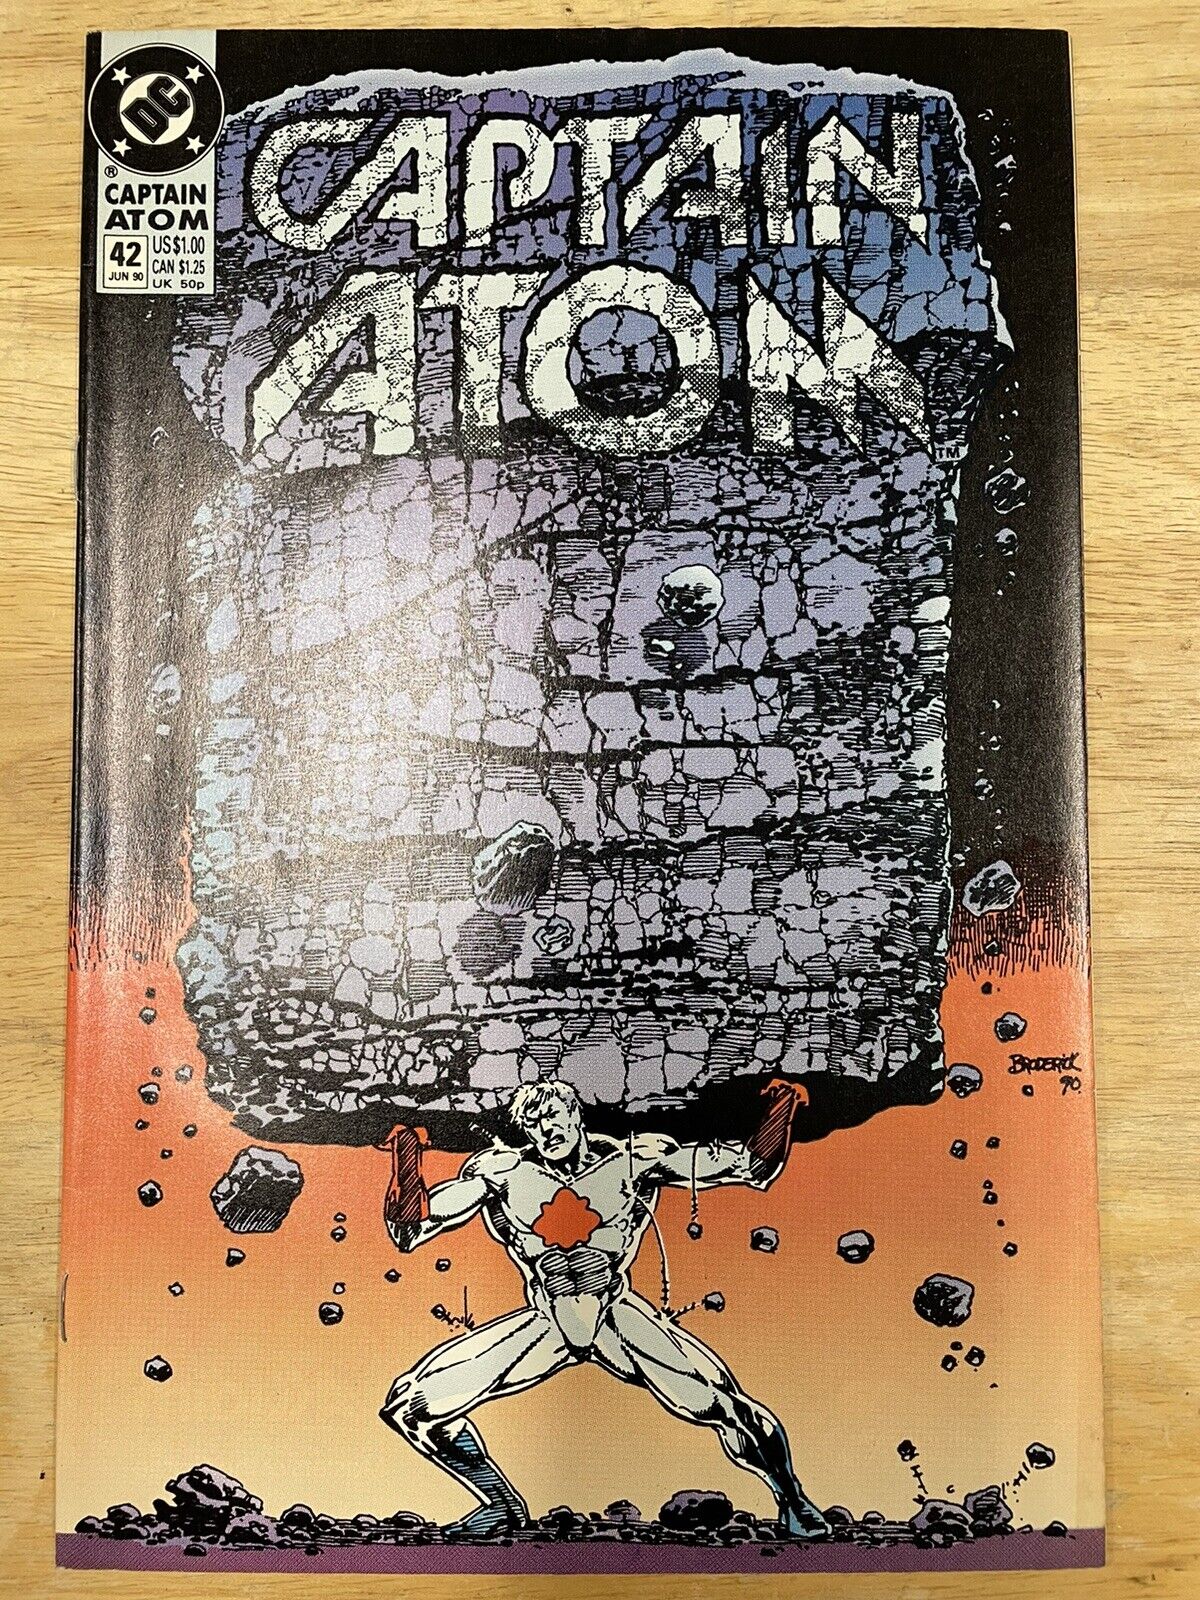 CAPTAIN ATOM #42 (1990) KEY 1ST APPEARANCE OF SANDMAN\'S DEATH IN THE DCU (B)